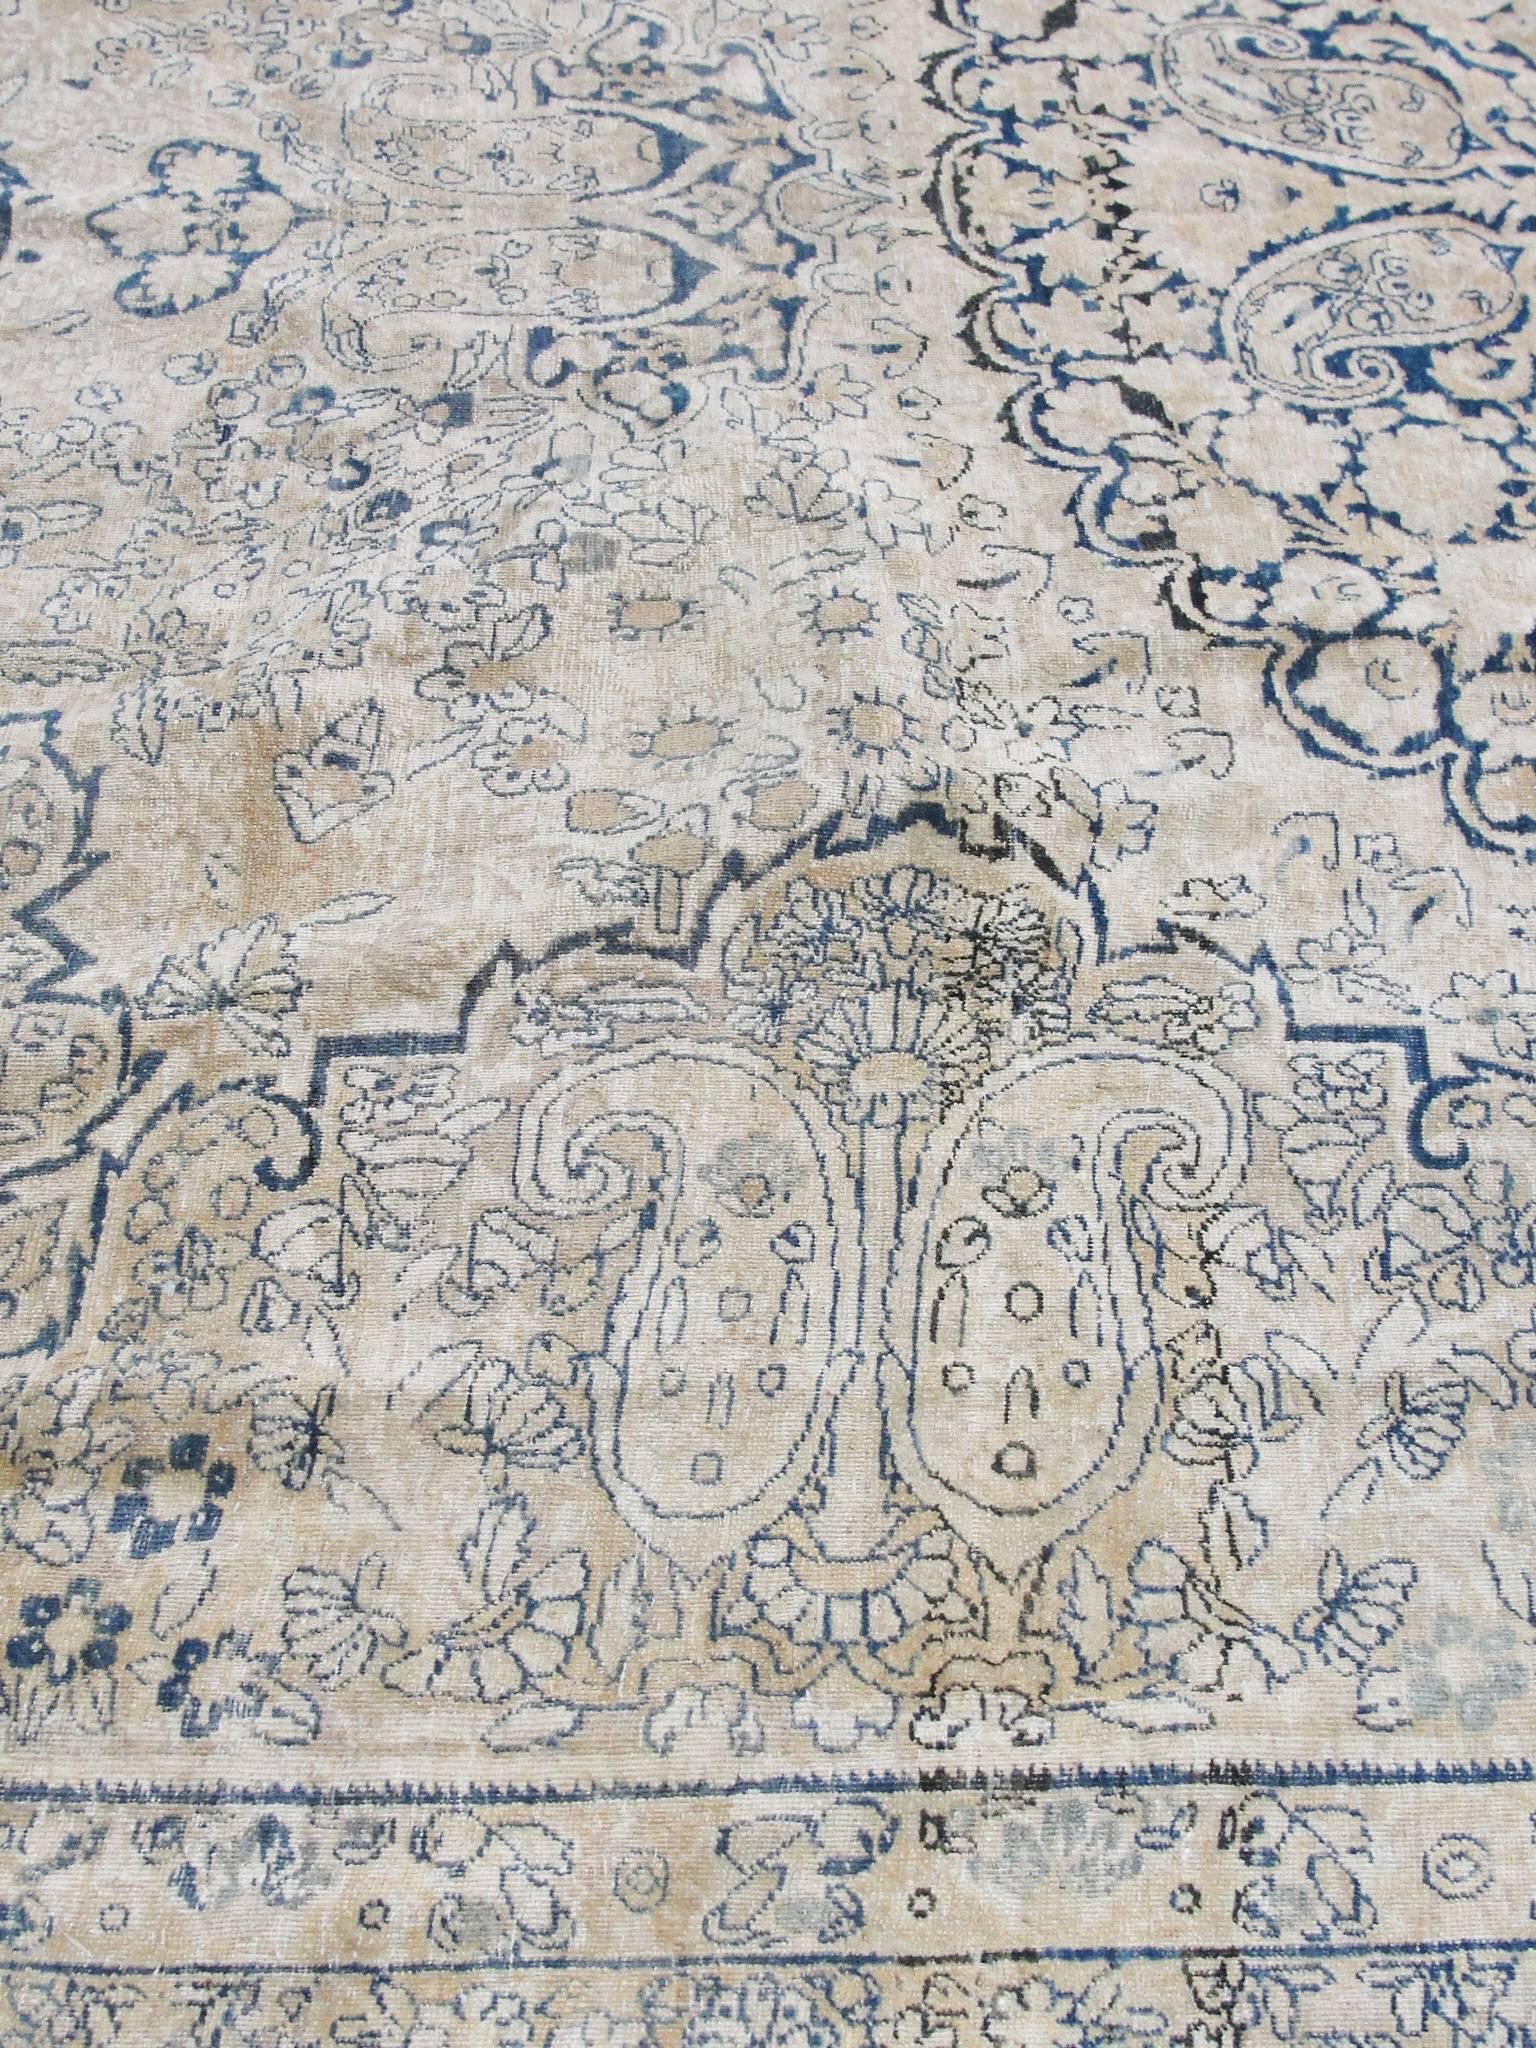  Antique Persian Kermanshah Carpet, 9'7